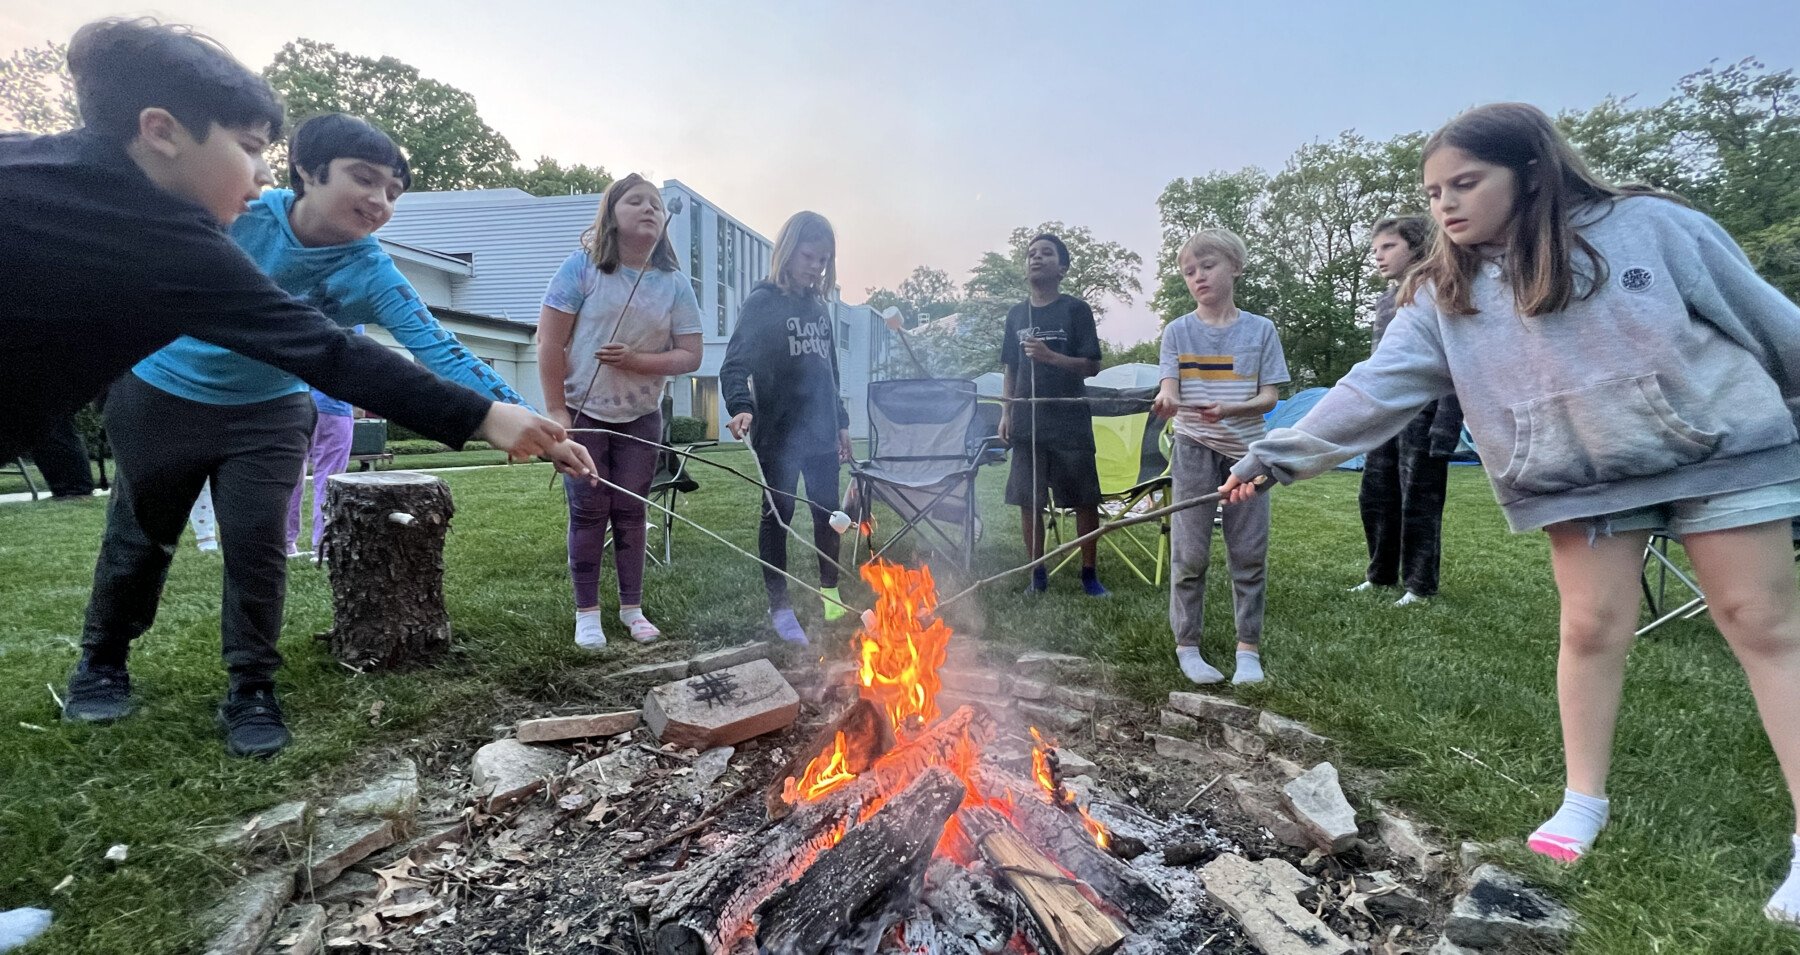 Students roasting marshmallows around campfire